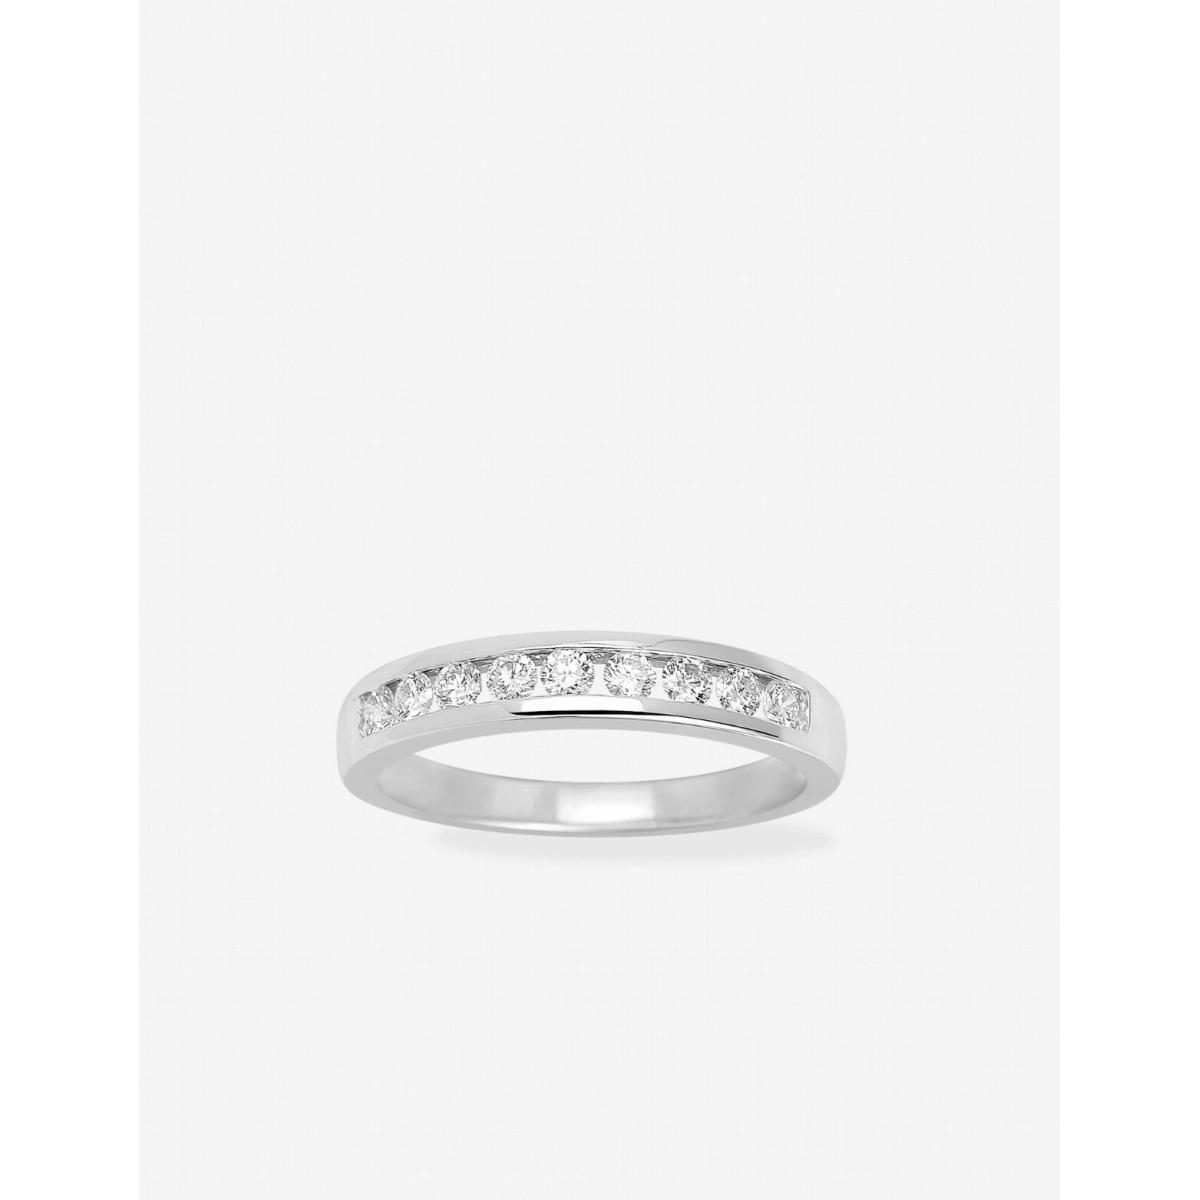 Wedding ring diam 0.35ct GHP1P2 18K WG Lua Blanca  2.553.09 - Size 52